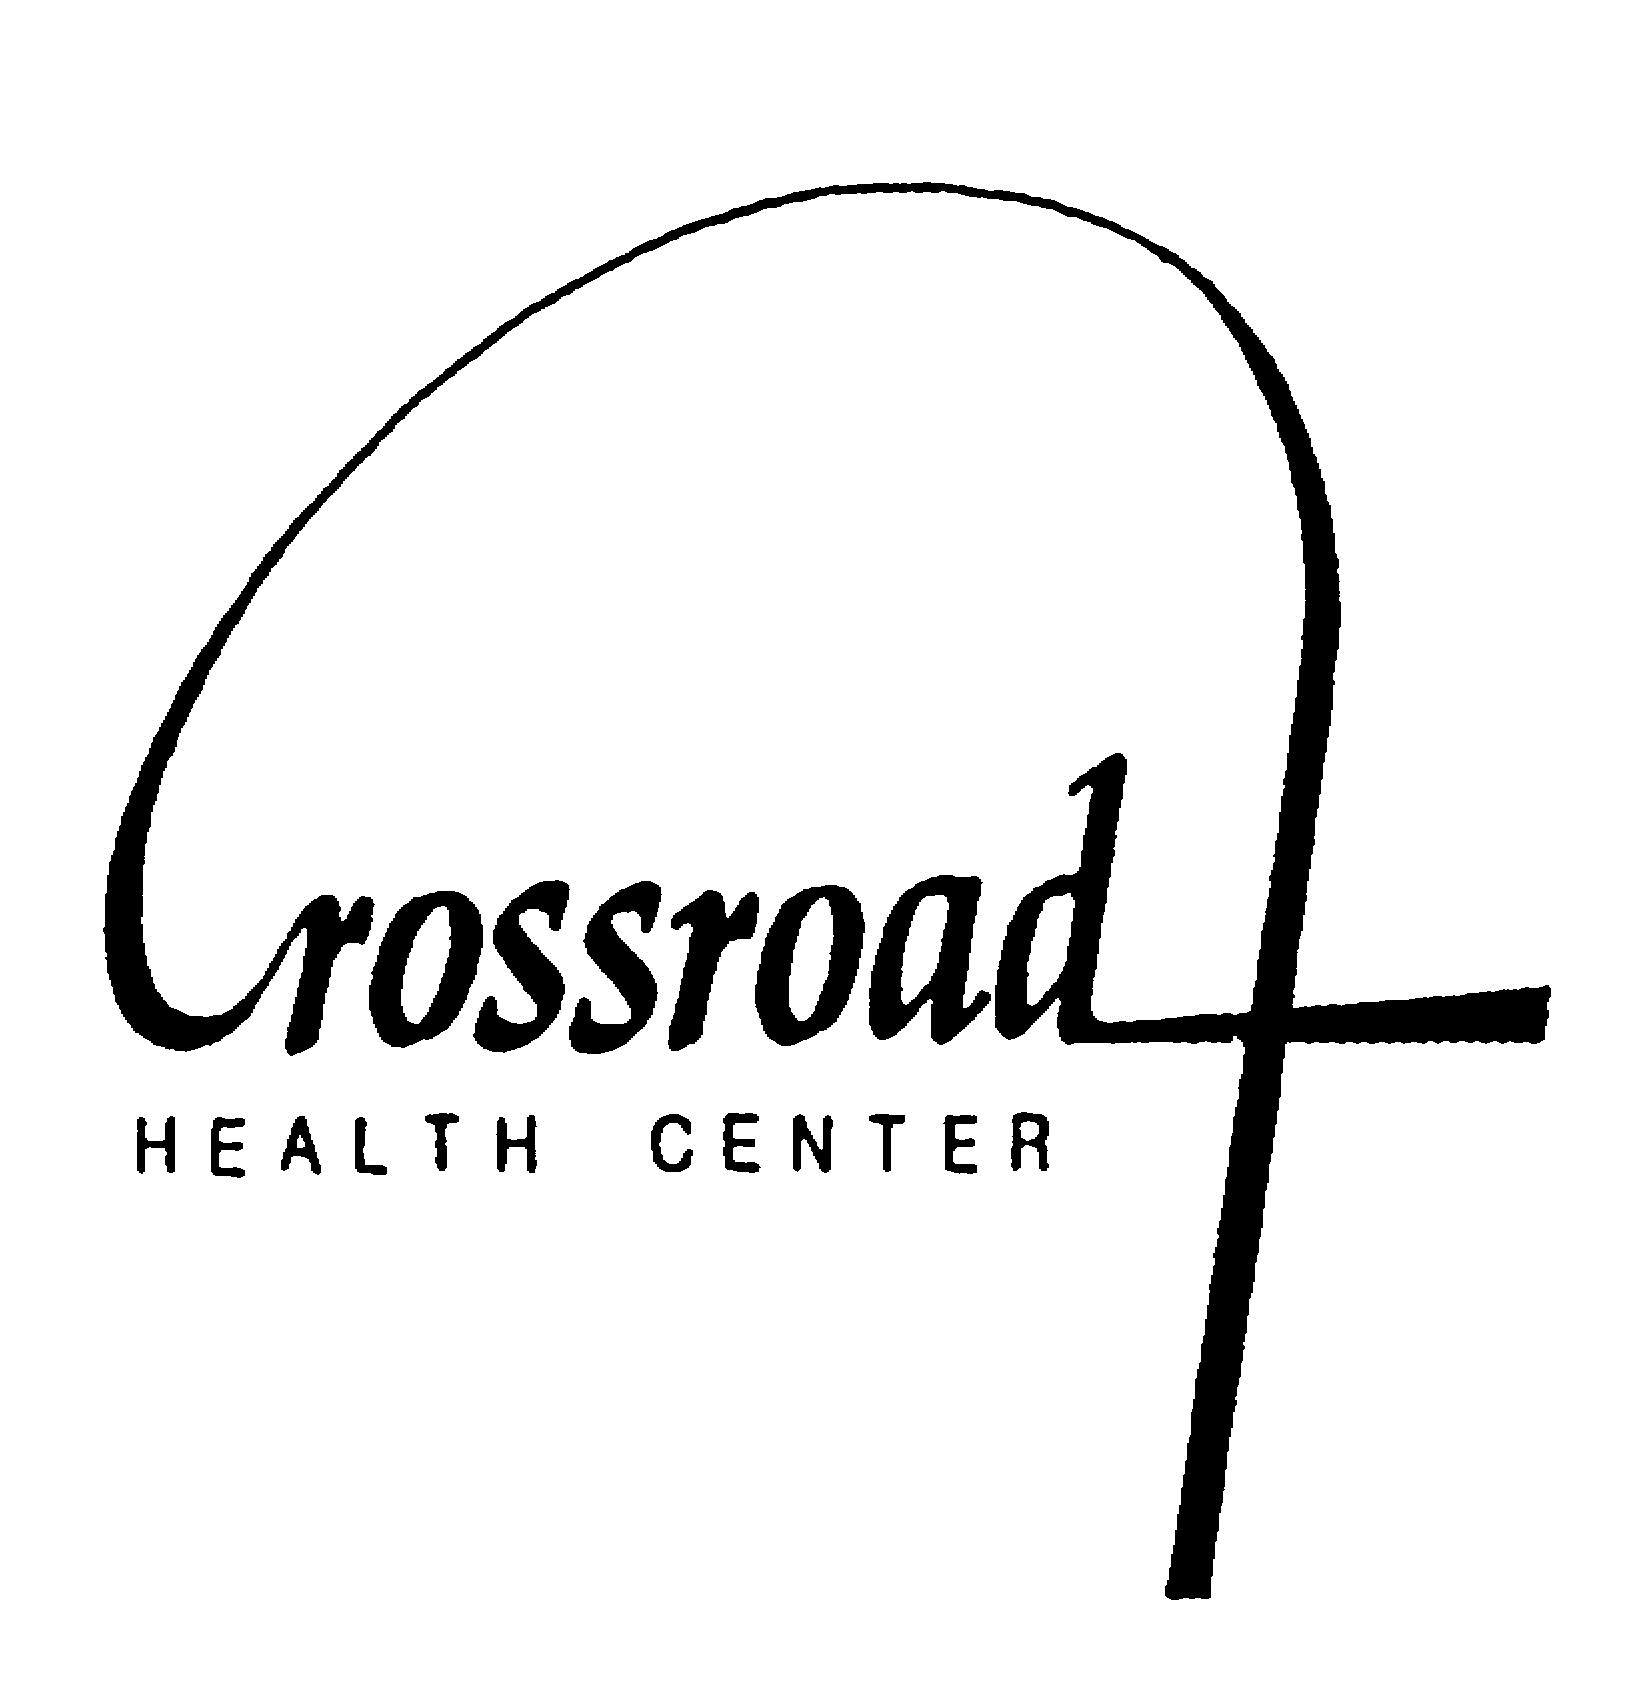 Crossroads Health Center